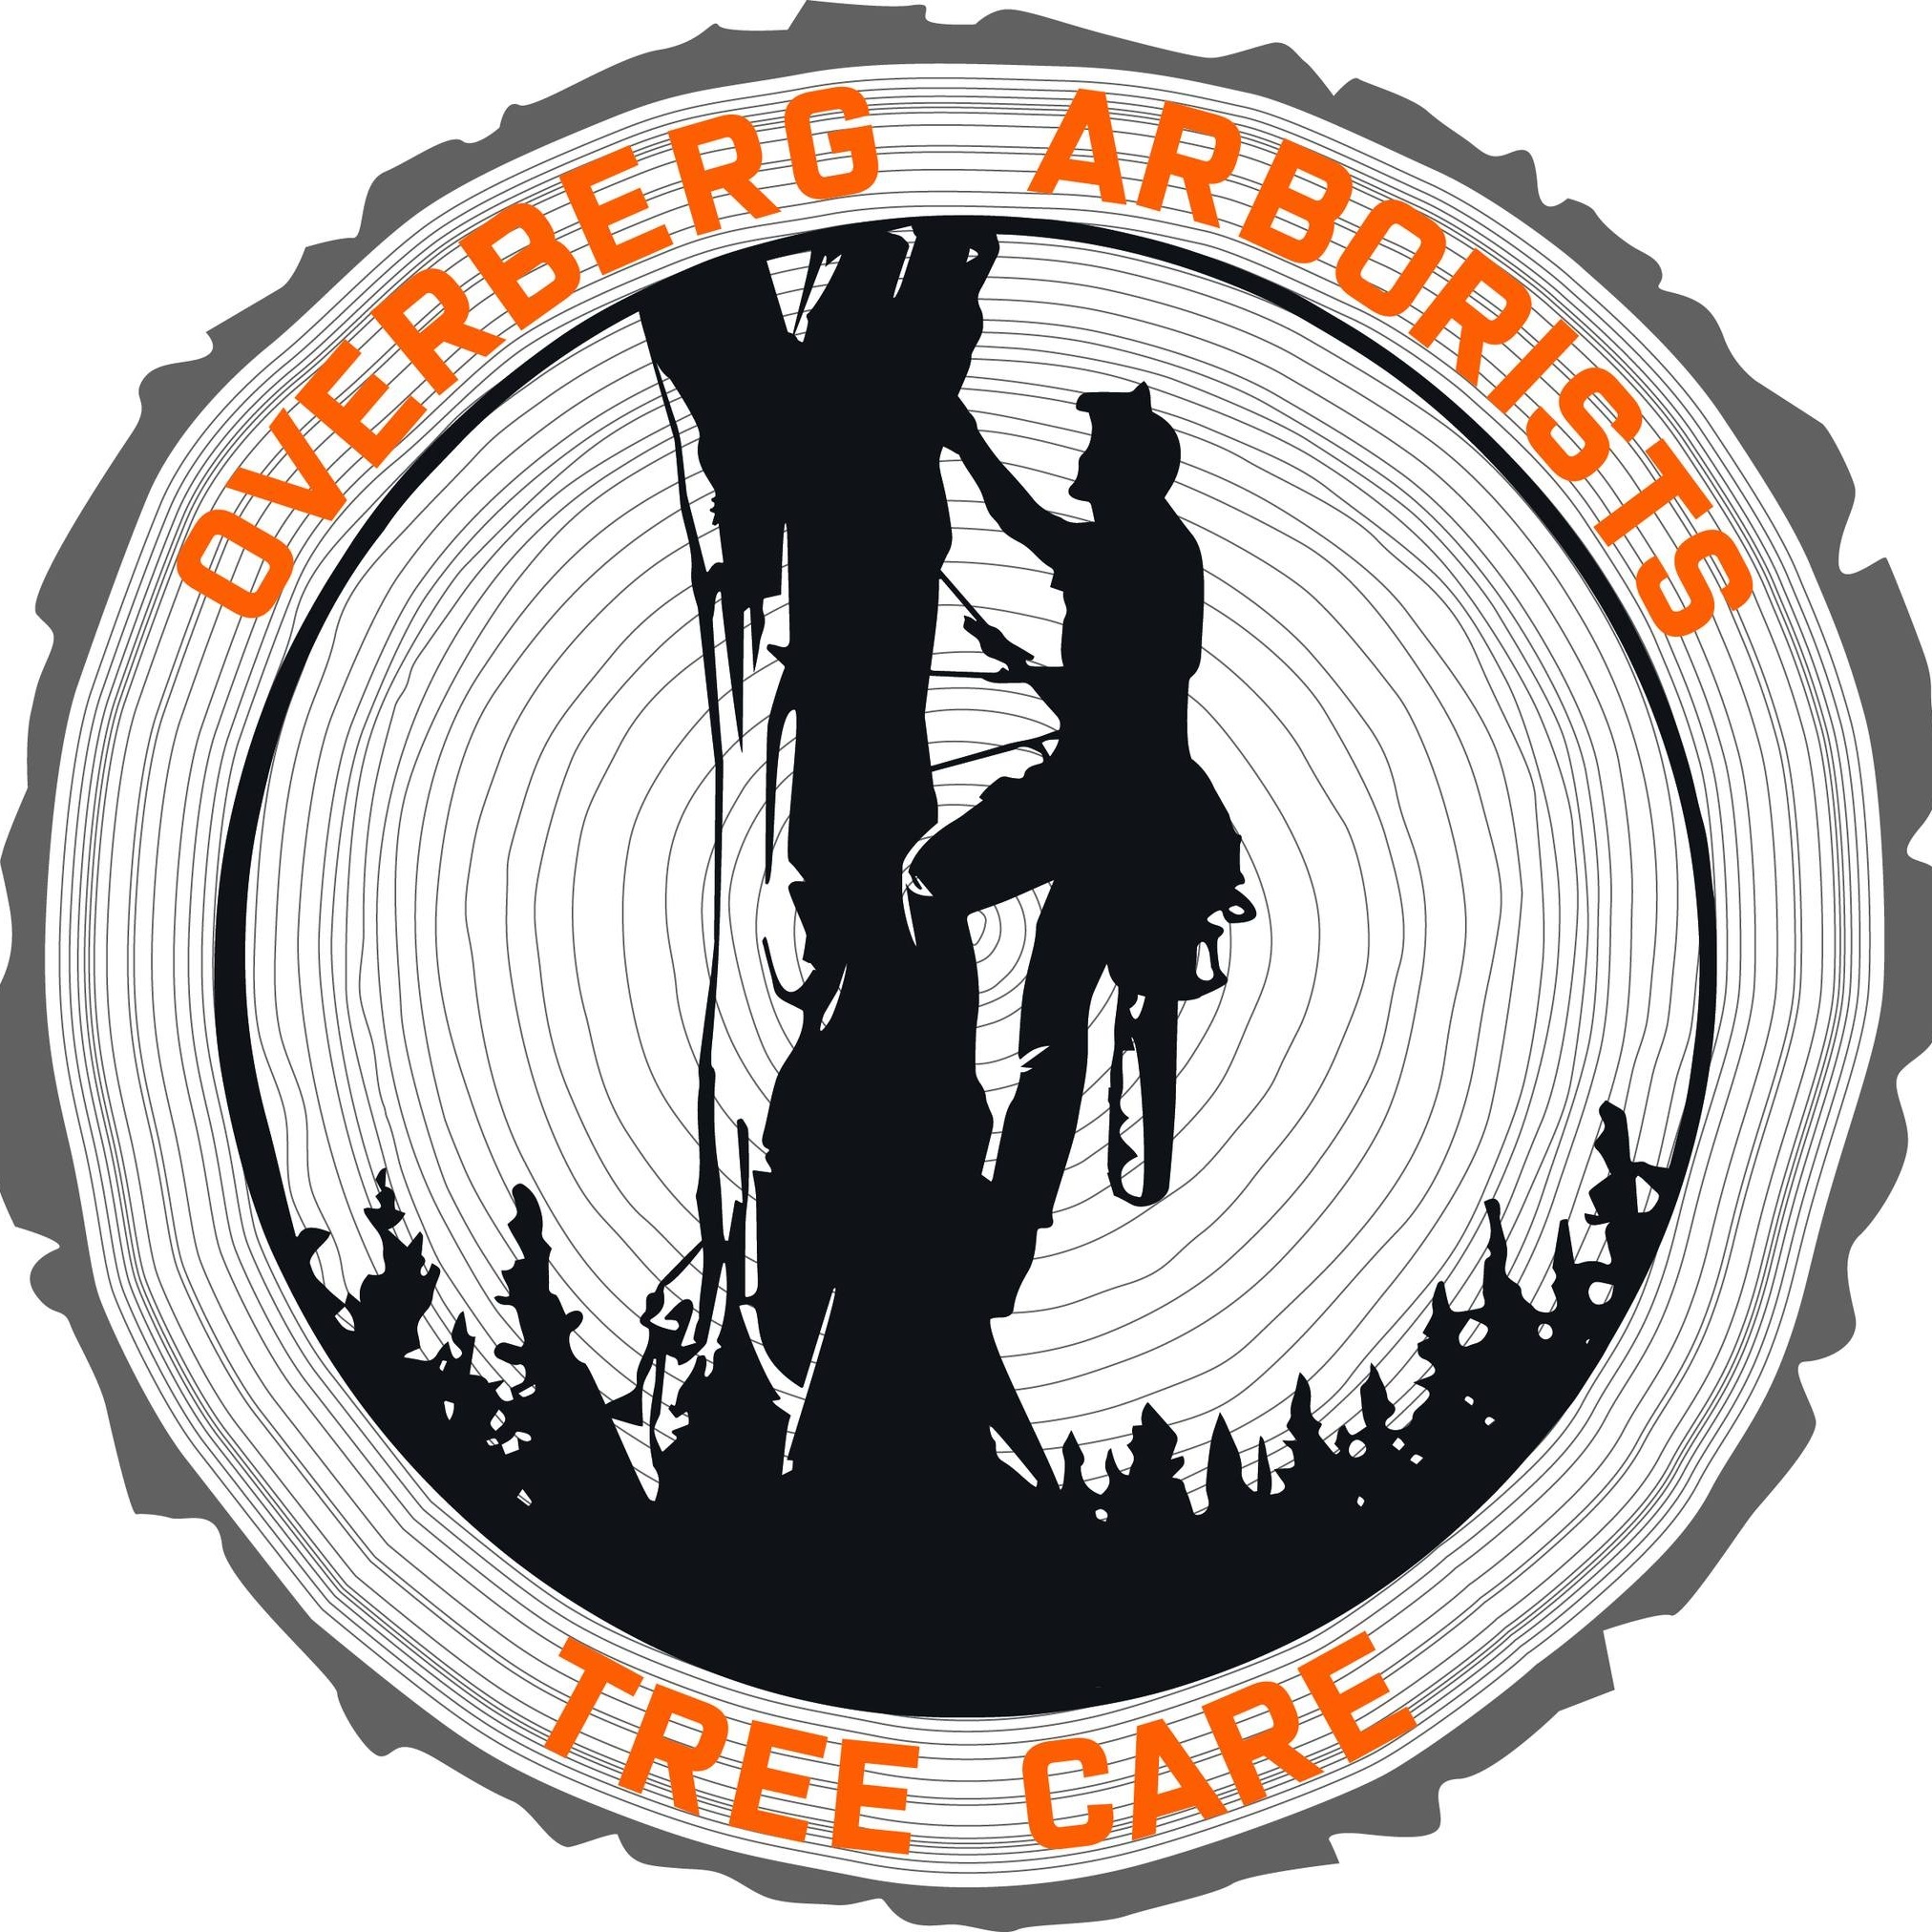 Overberg Arborists